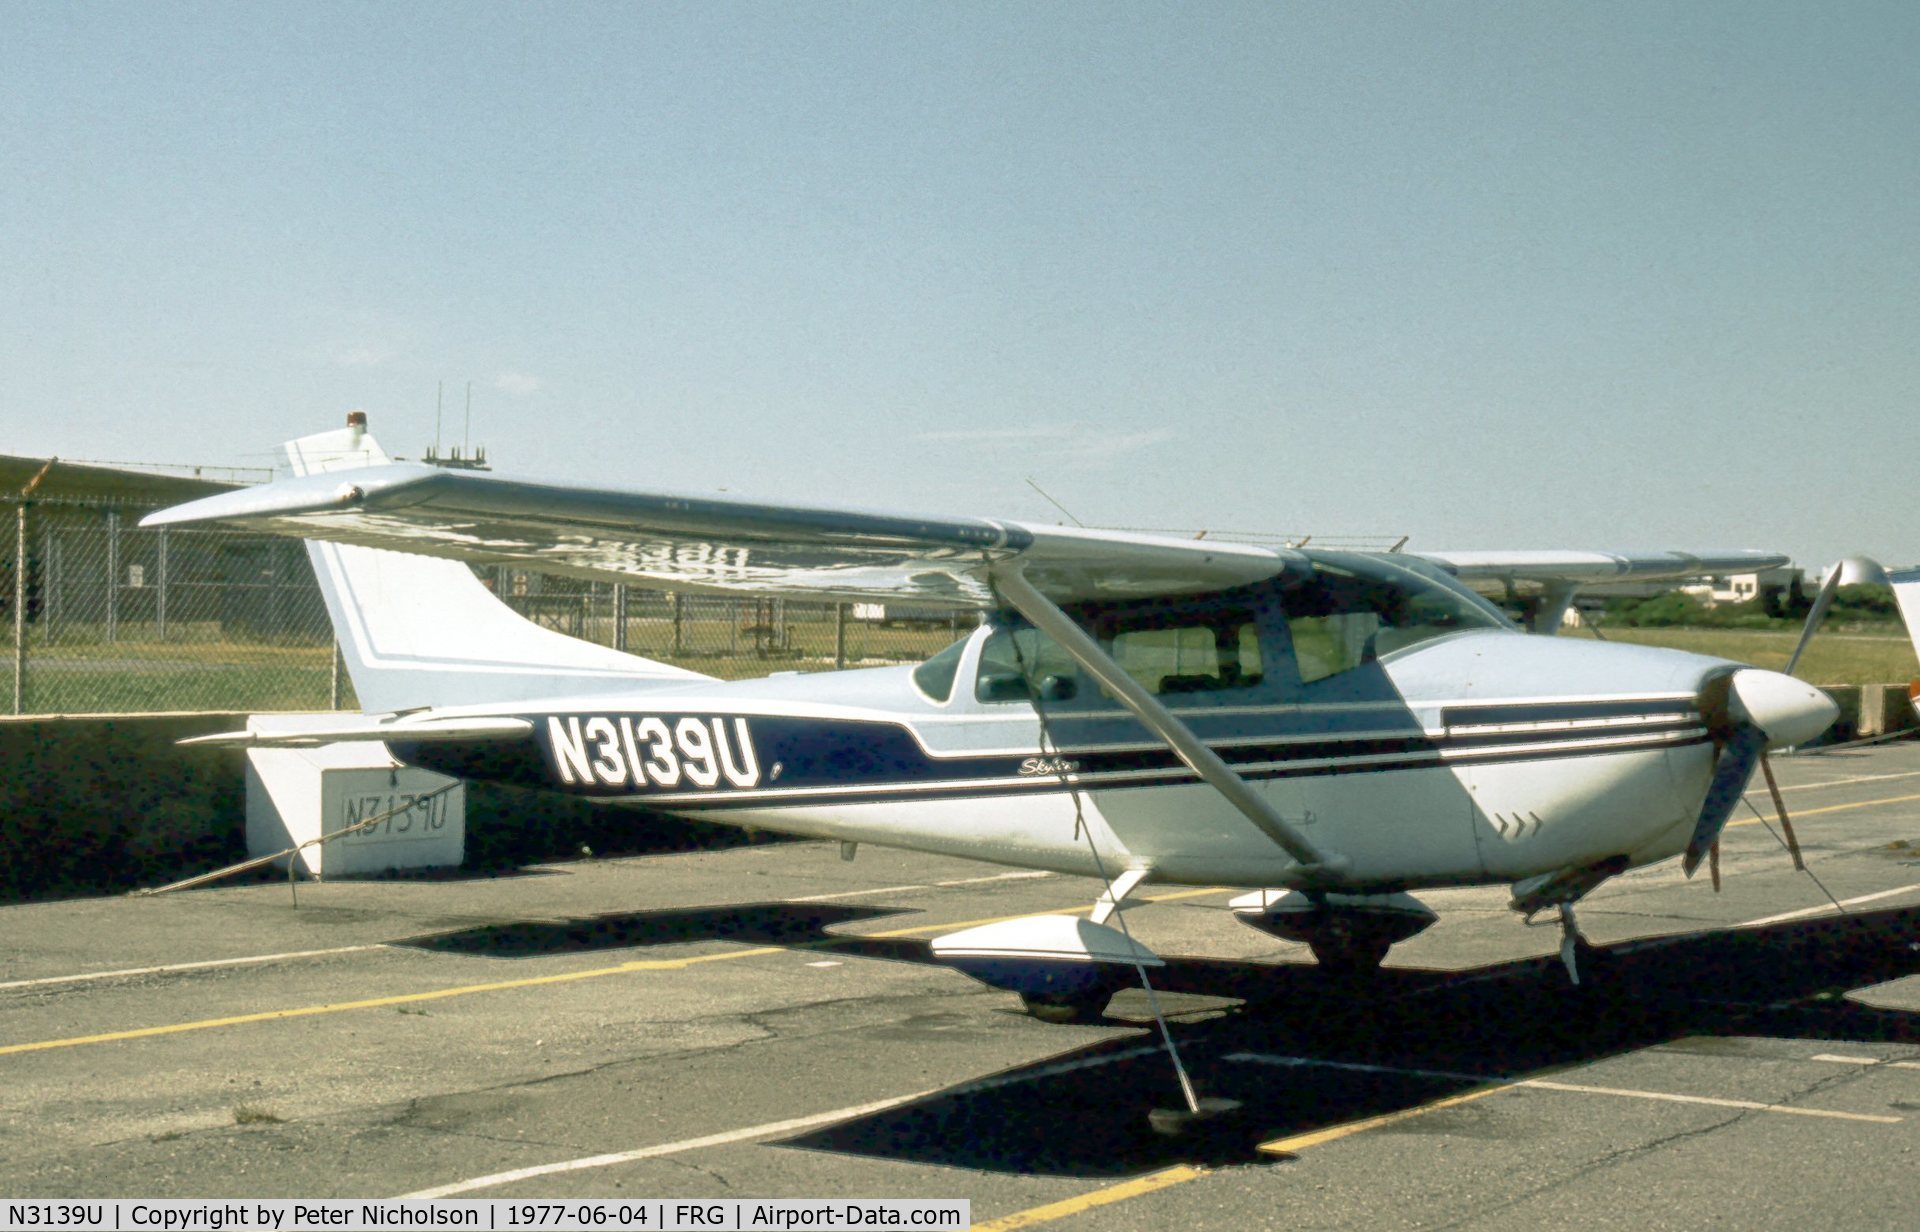 N3139U, Cessna 182F Skylane C/N 18254539, Cessna 182F Skylane seen at Republic Airport, Long Island in the Summer of 1977.